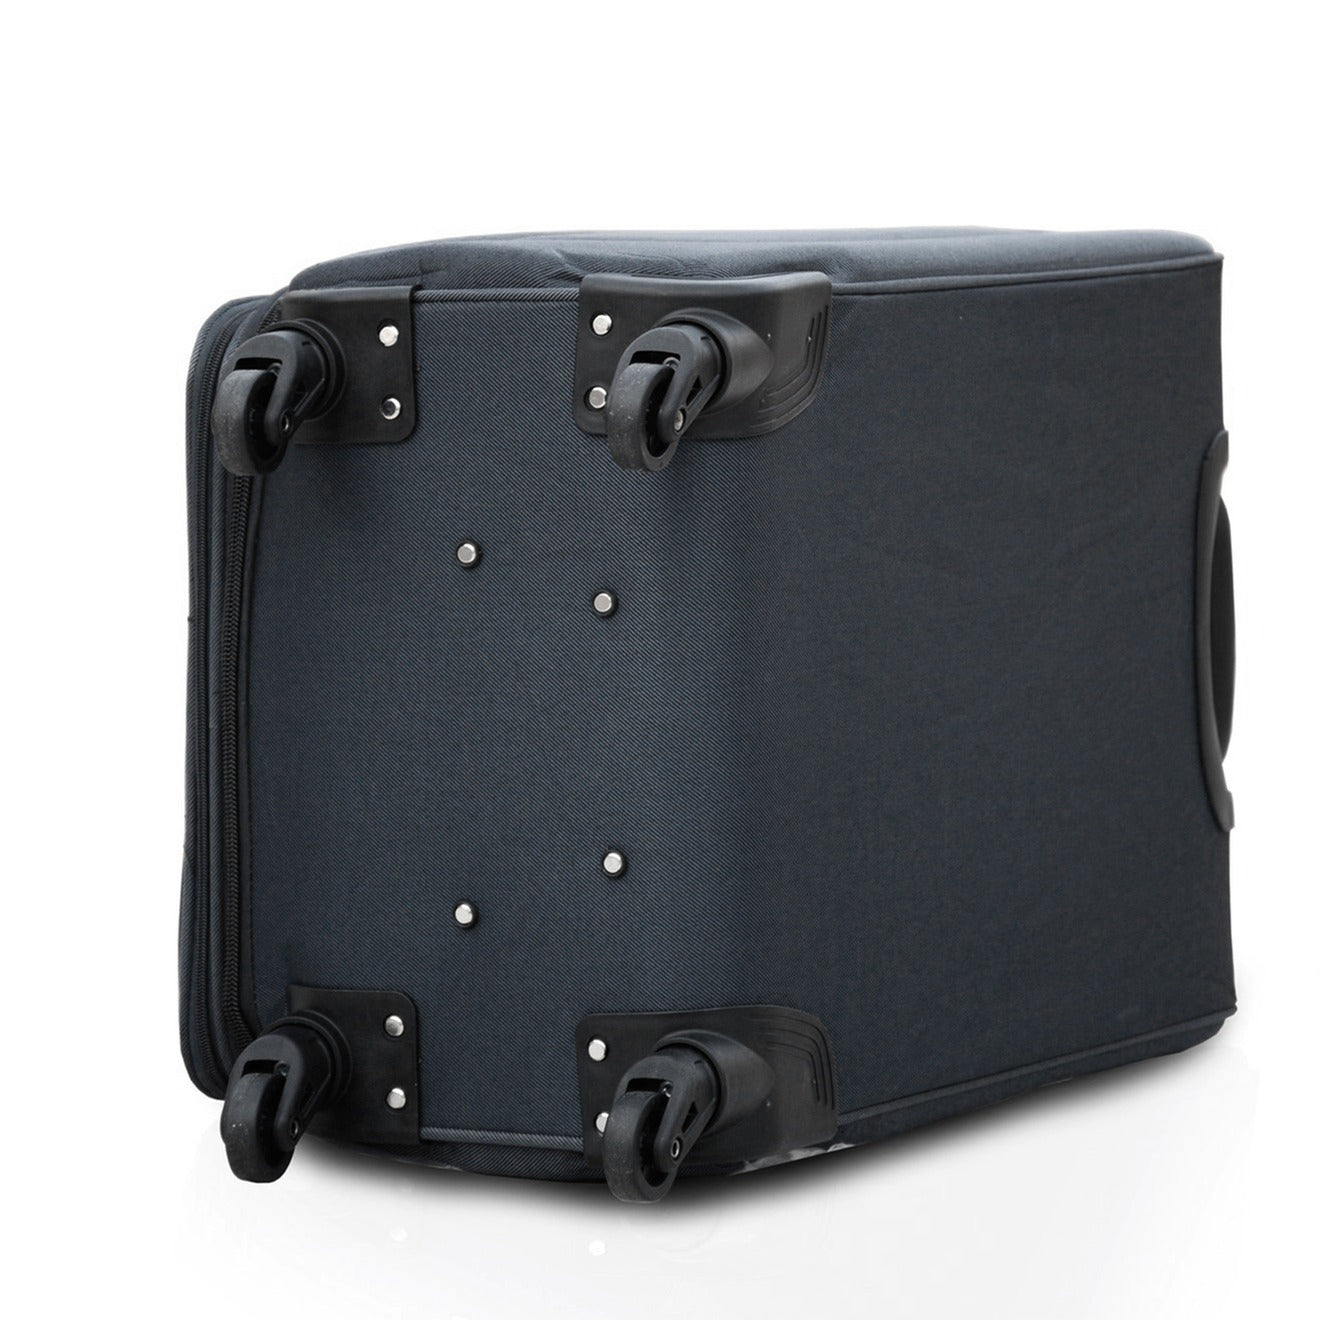 4 Piece Full Set 20" 24" 28" 32 Inches Black SJ Jian 4 Wheel Lightweight Soft Material Luggage Bag